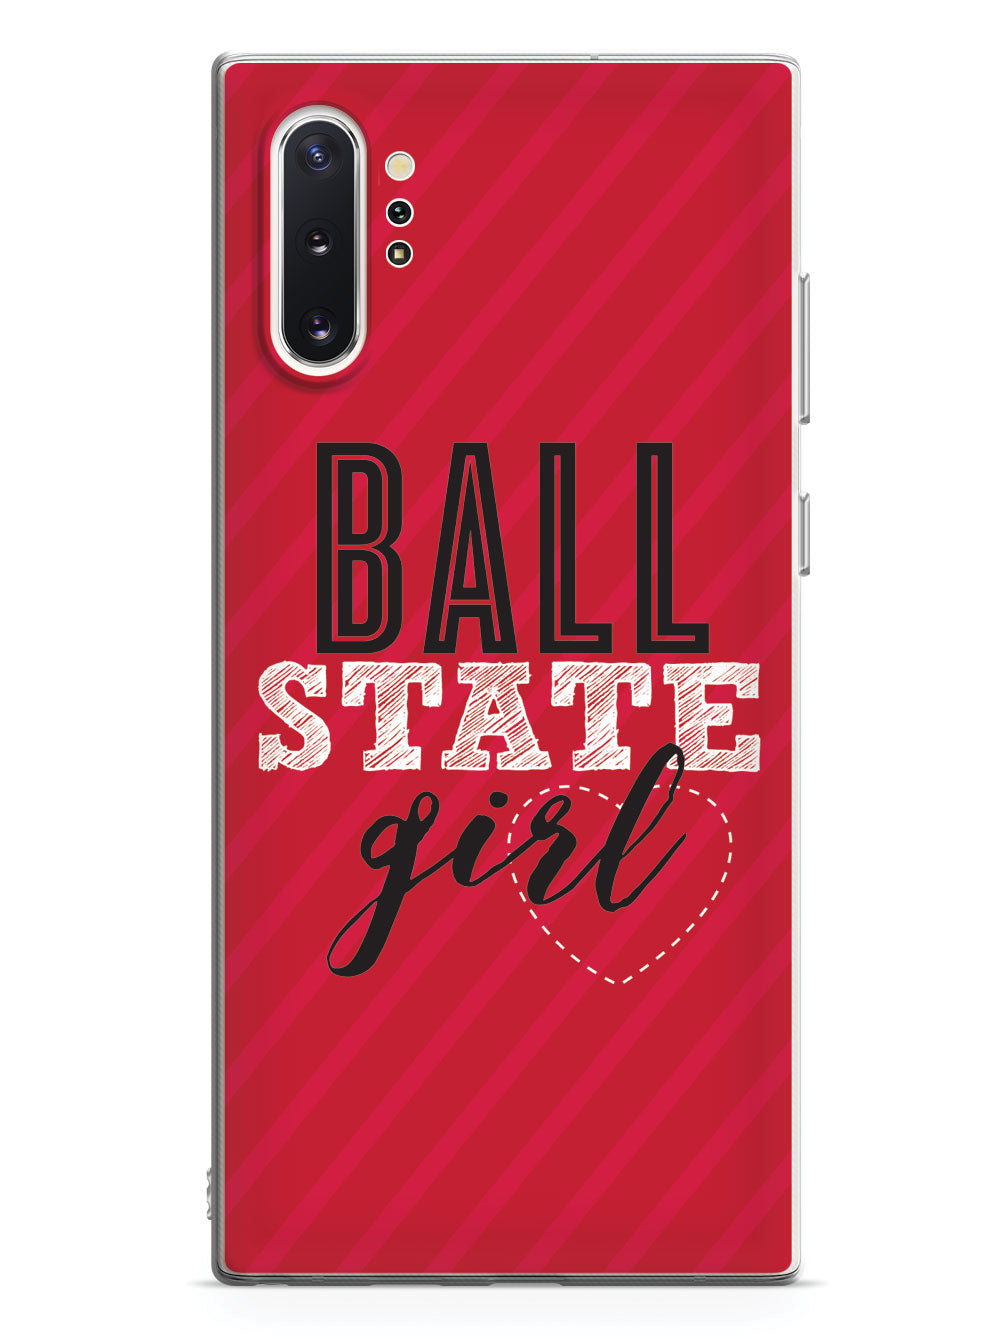 Ball State Girl Case